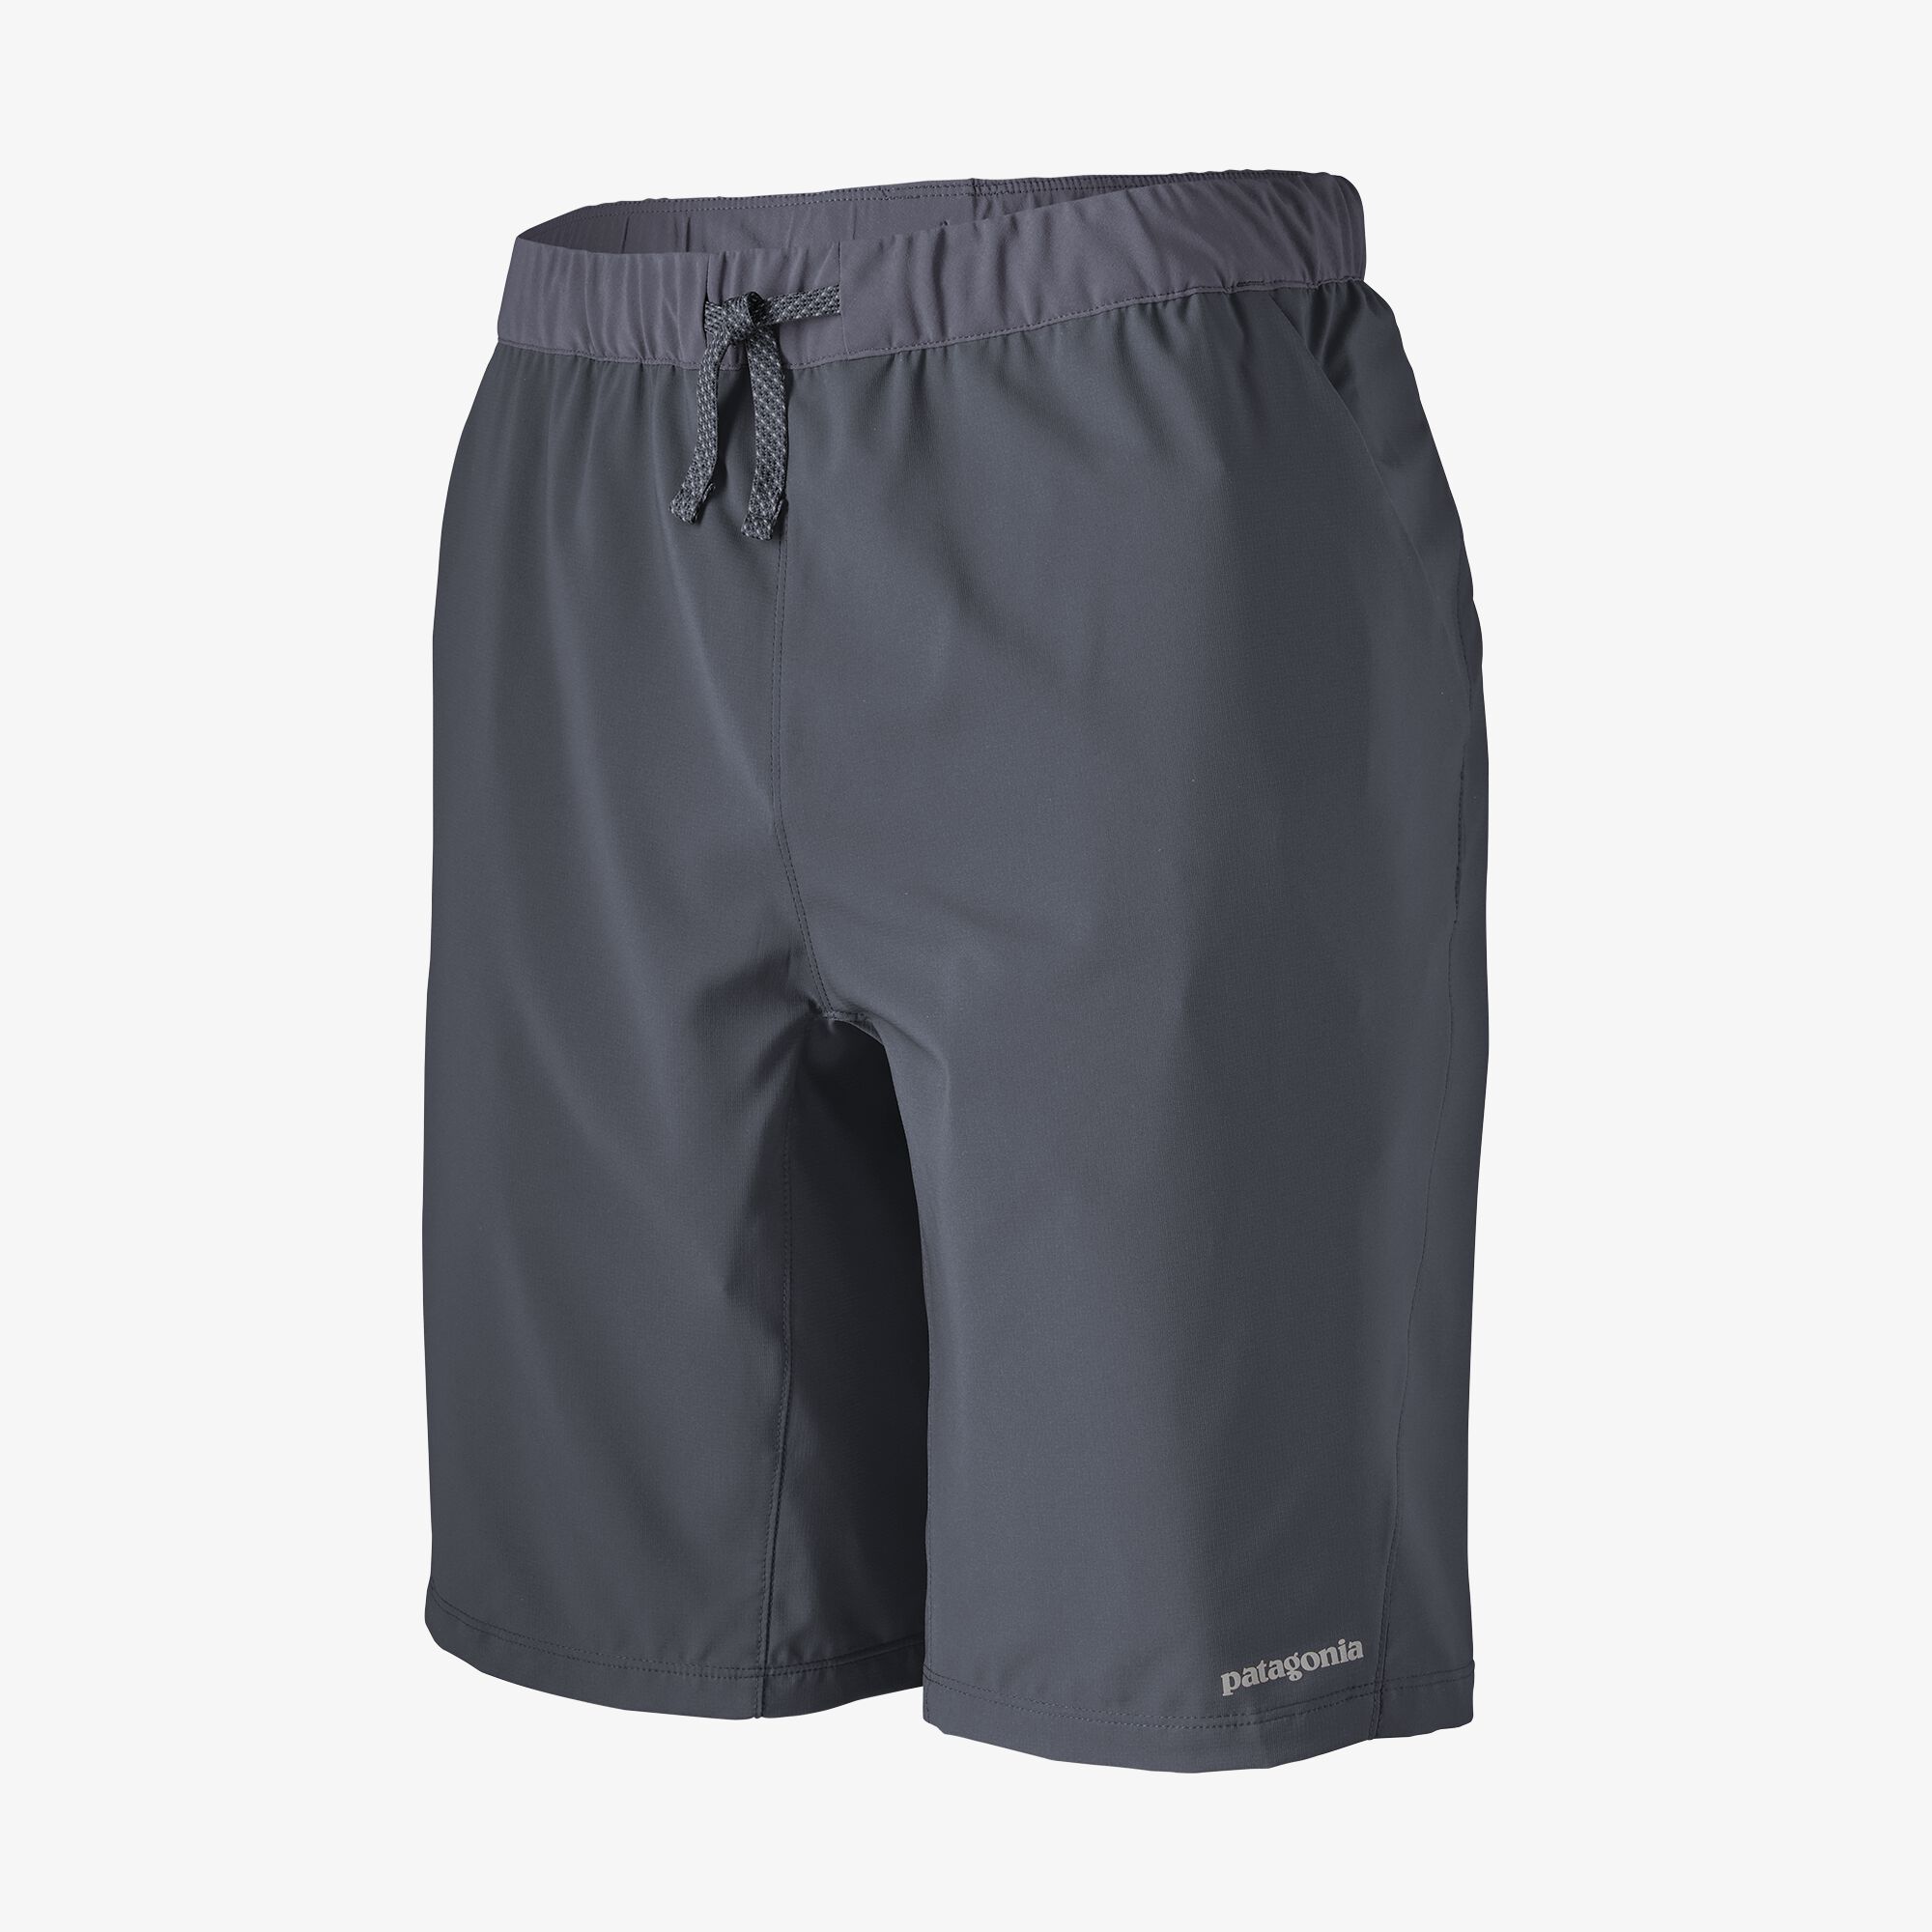 Patagonia Men's Terrebonne Shorts - Recycled Polyester, Smolder Blue / S